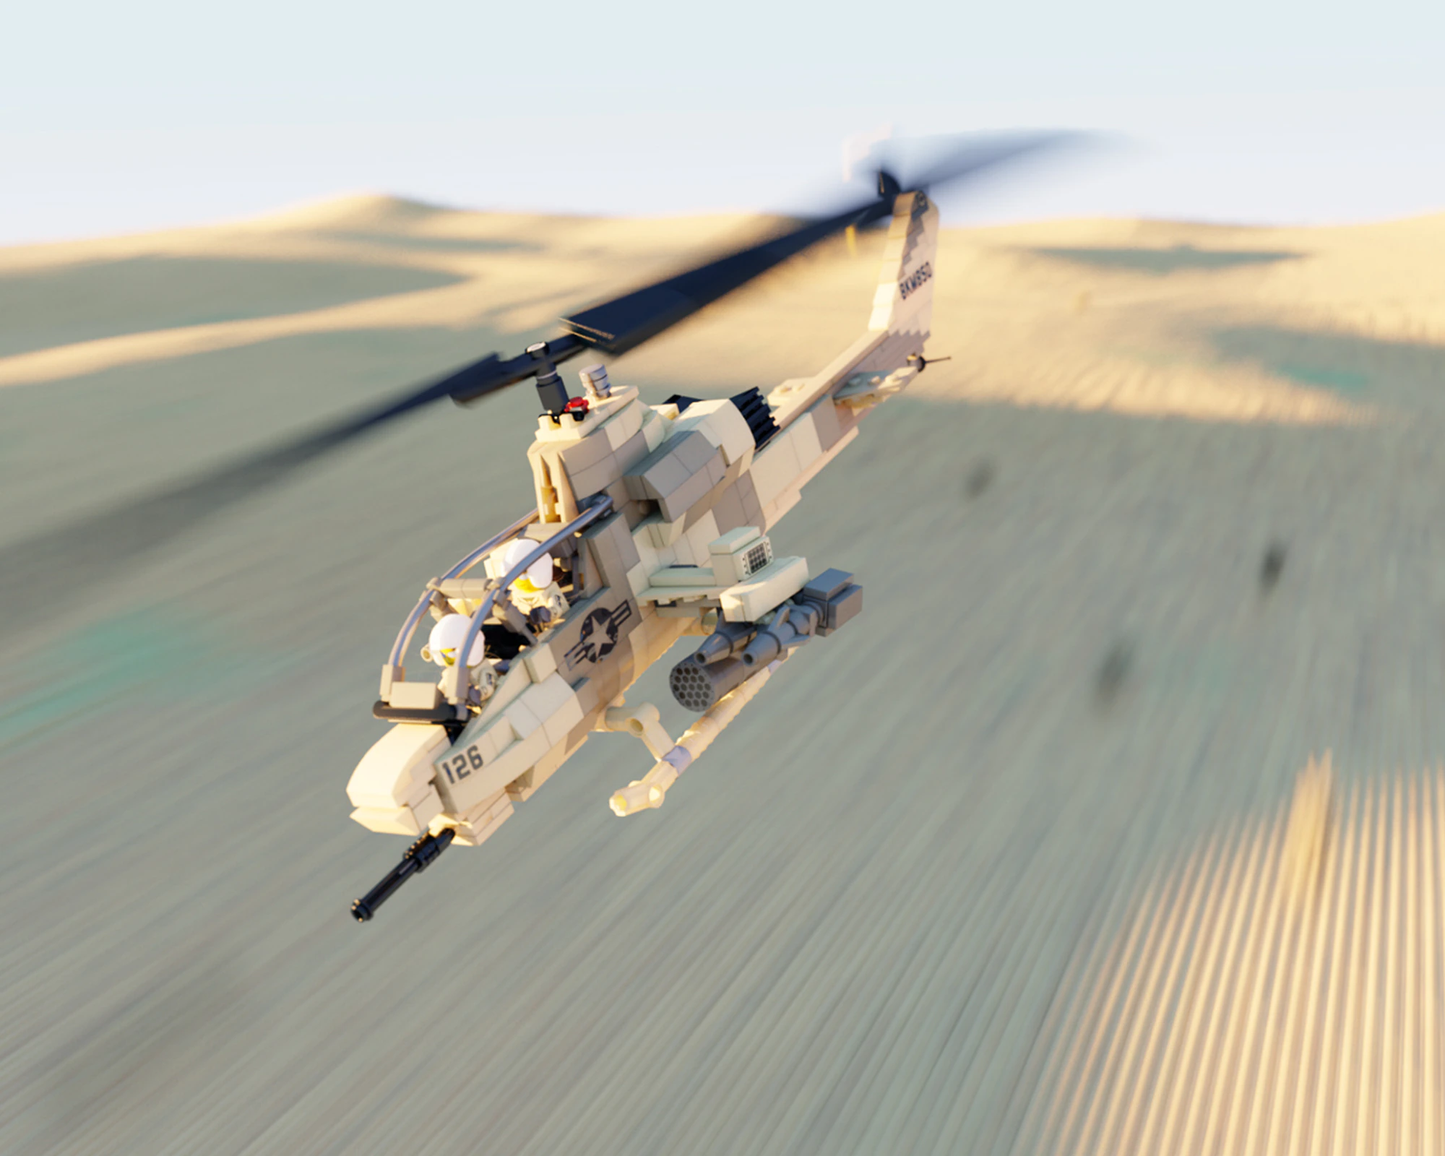 Load image into Gallery viewer, AH-1W SuperCobra - MOMCOM inc.
